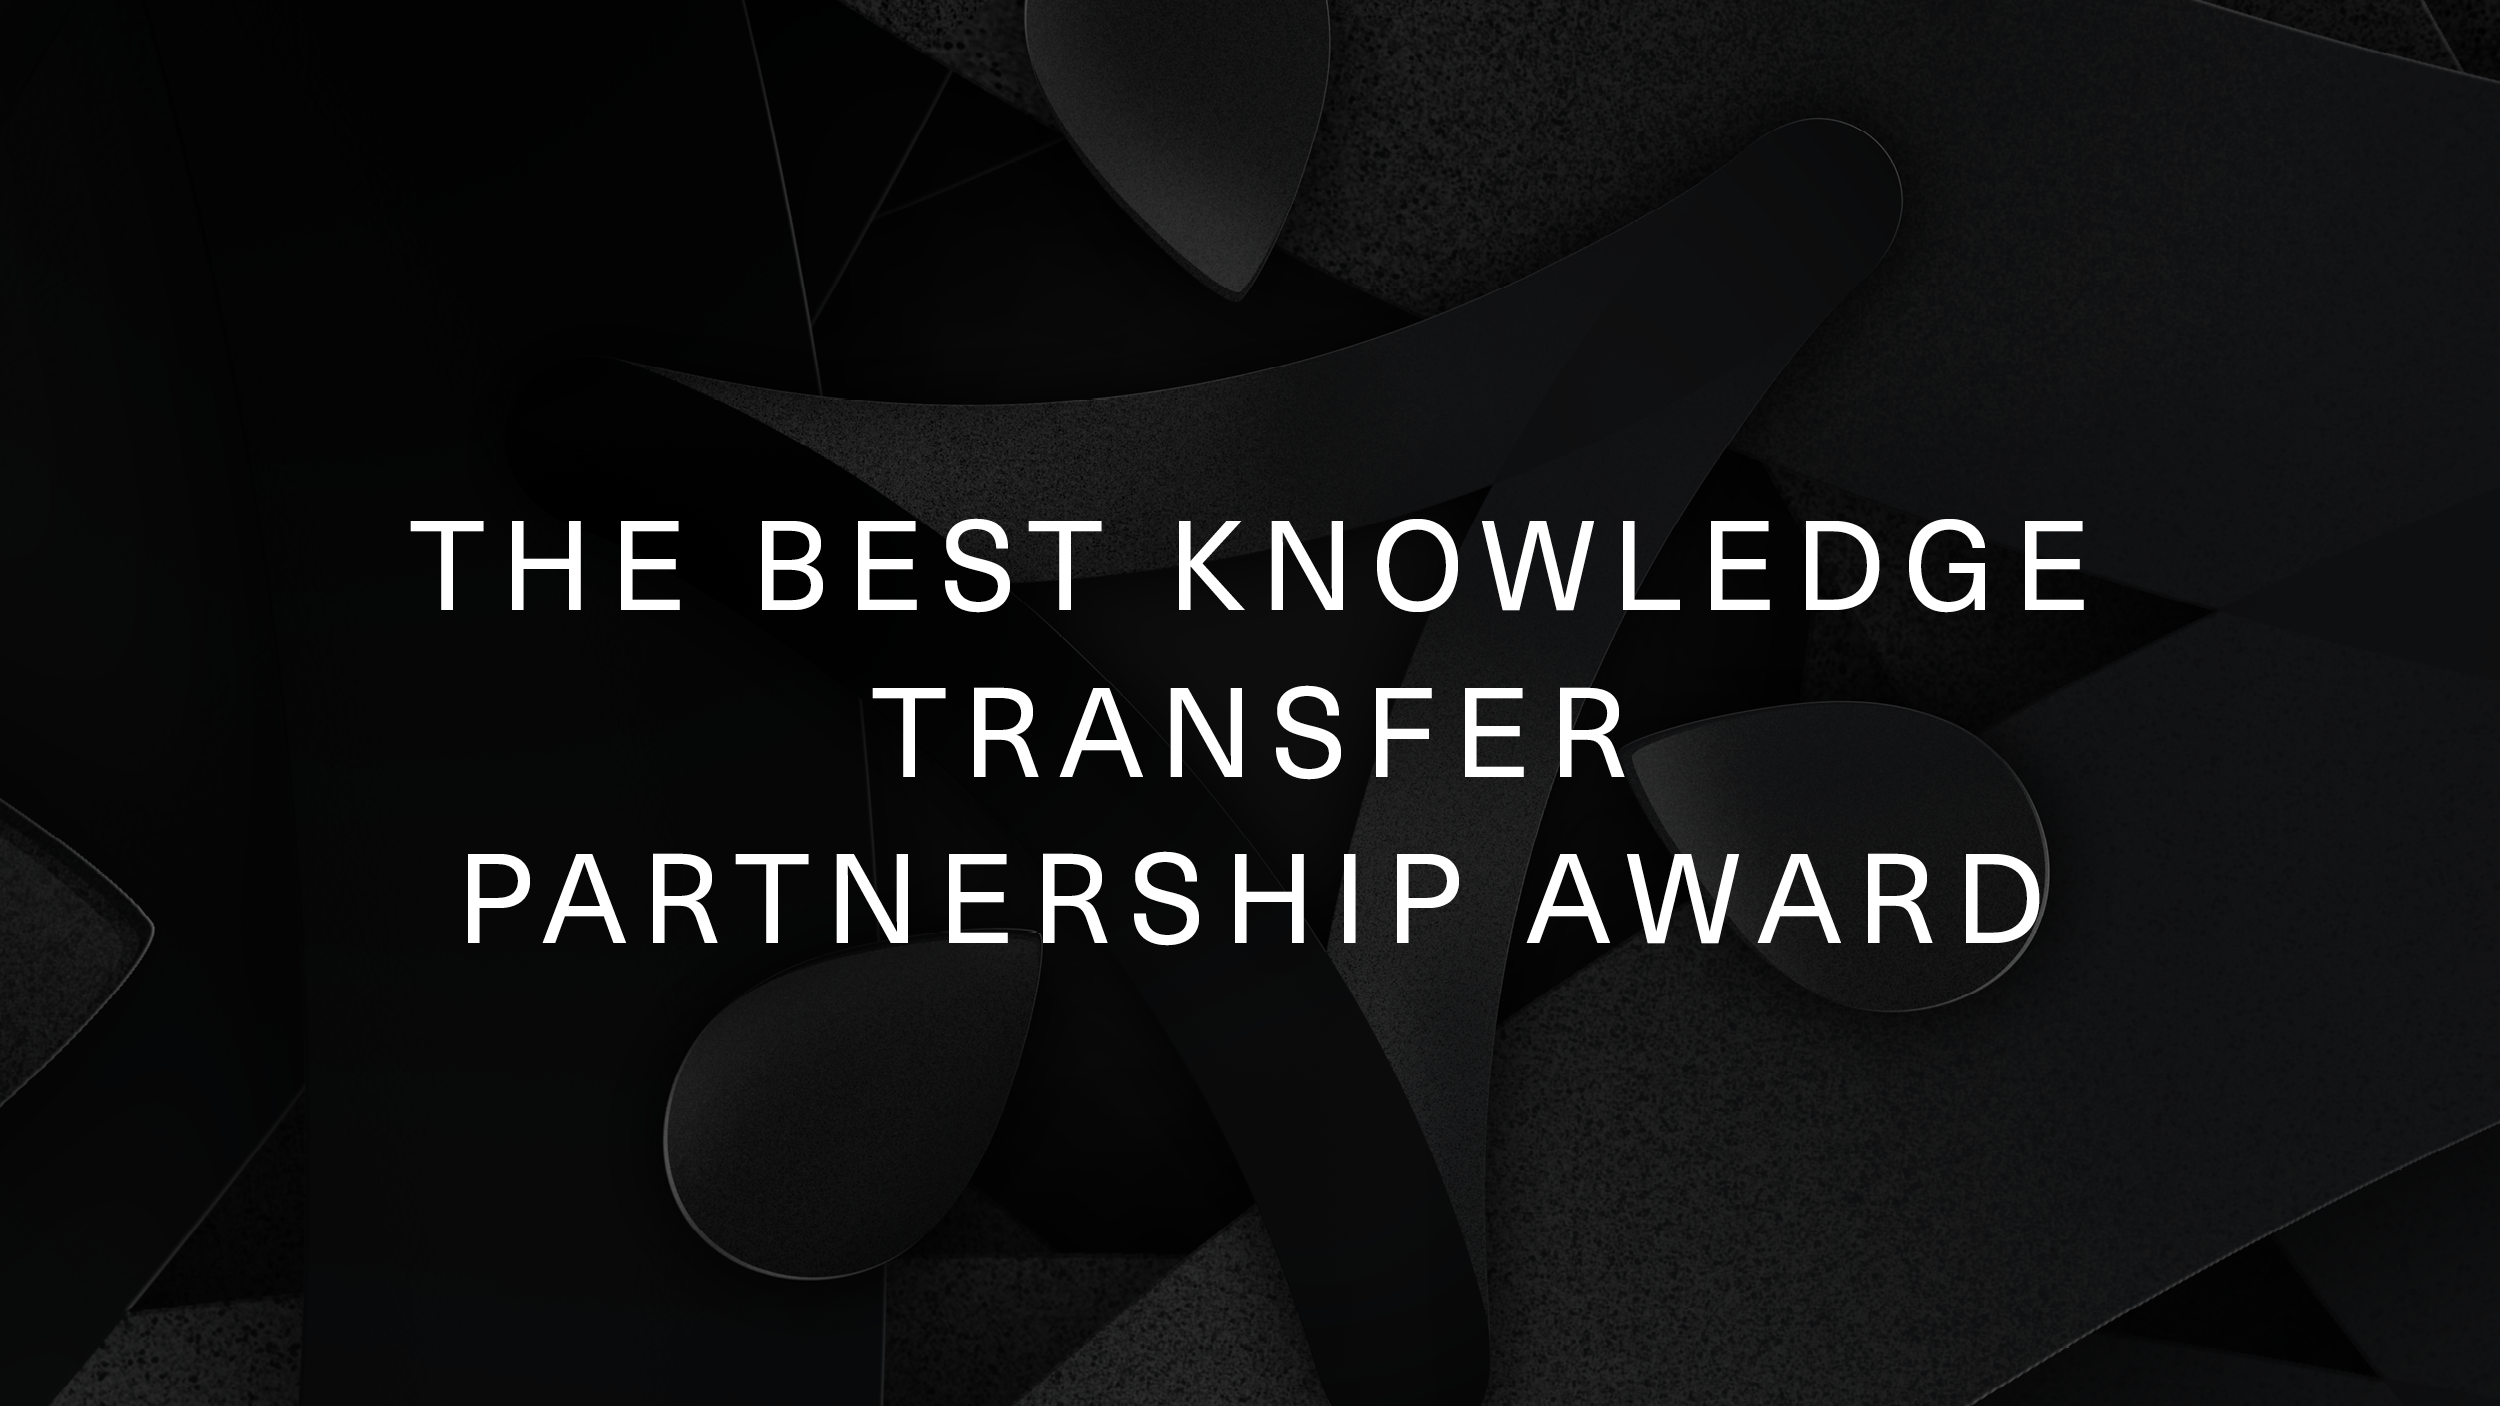 The Best Knowledge Transfer Partnership Award